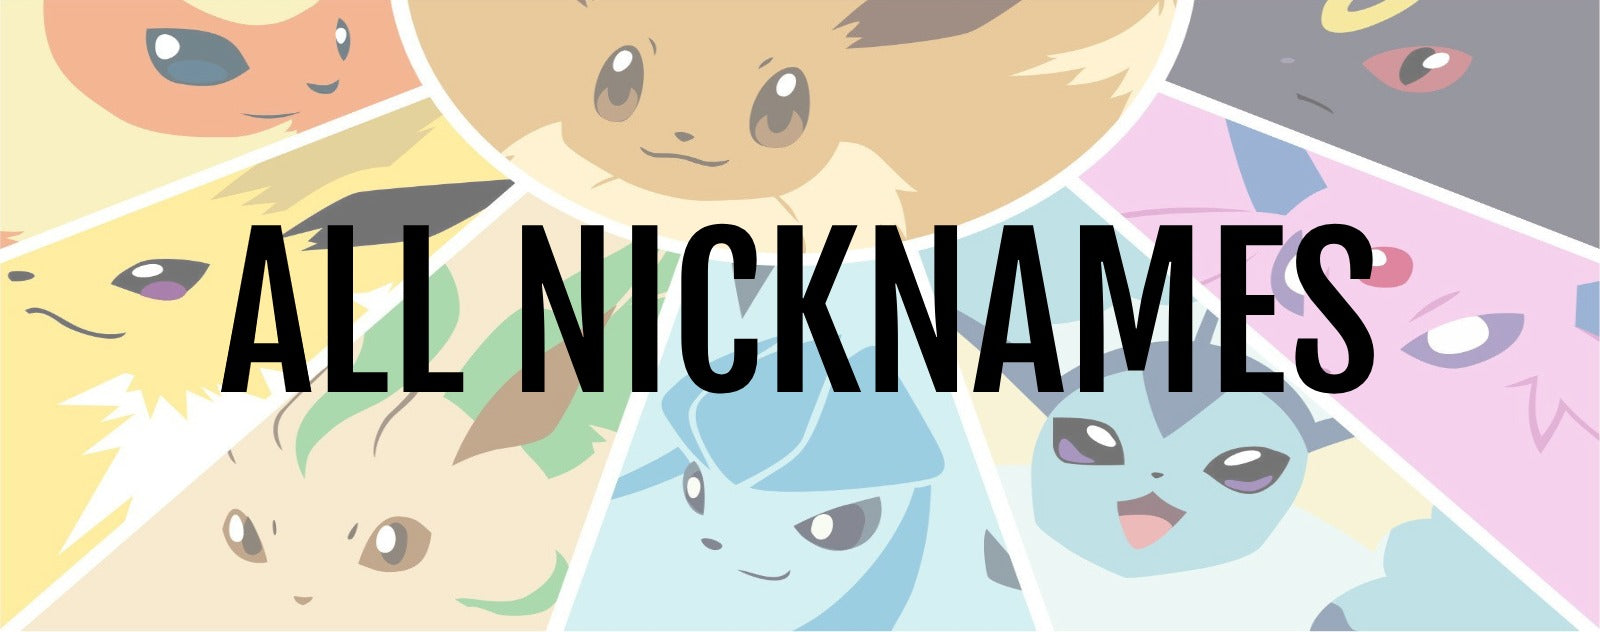 Pokemon go eevee evolution names